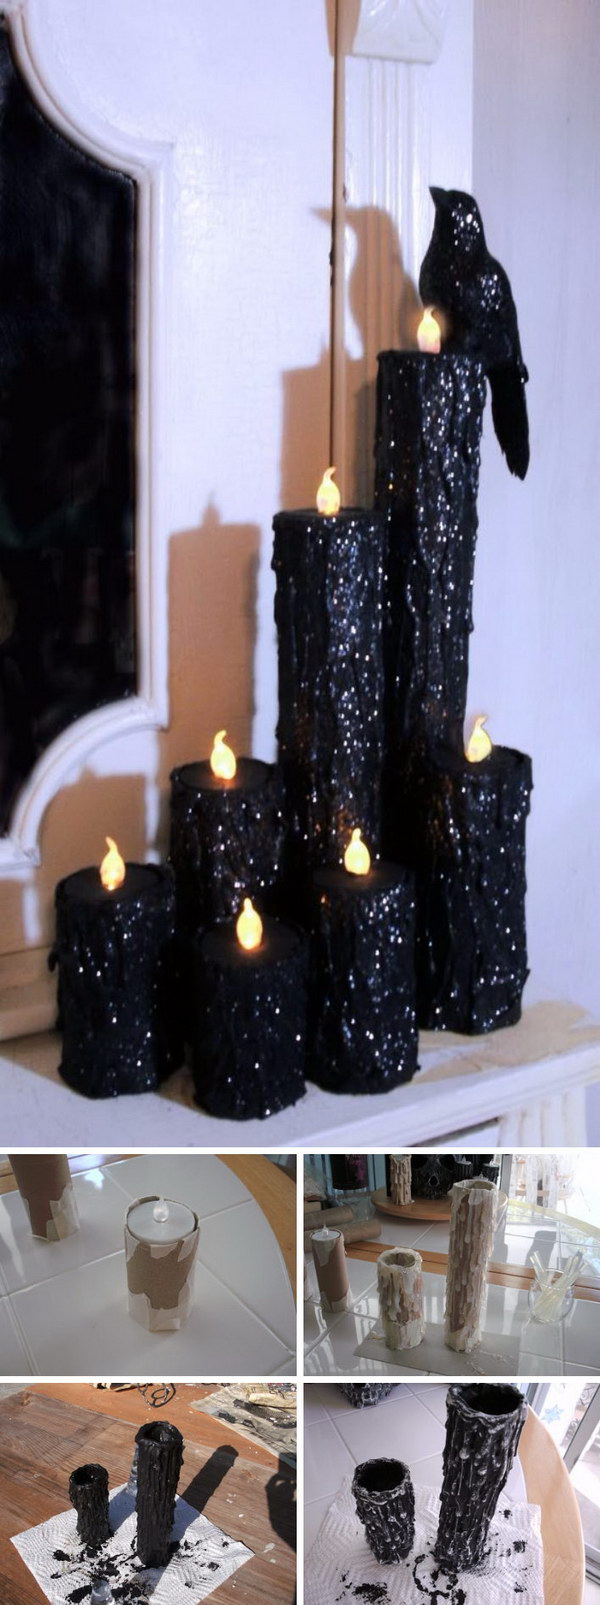 1.Black Candles